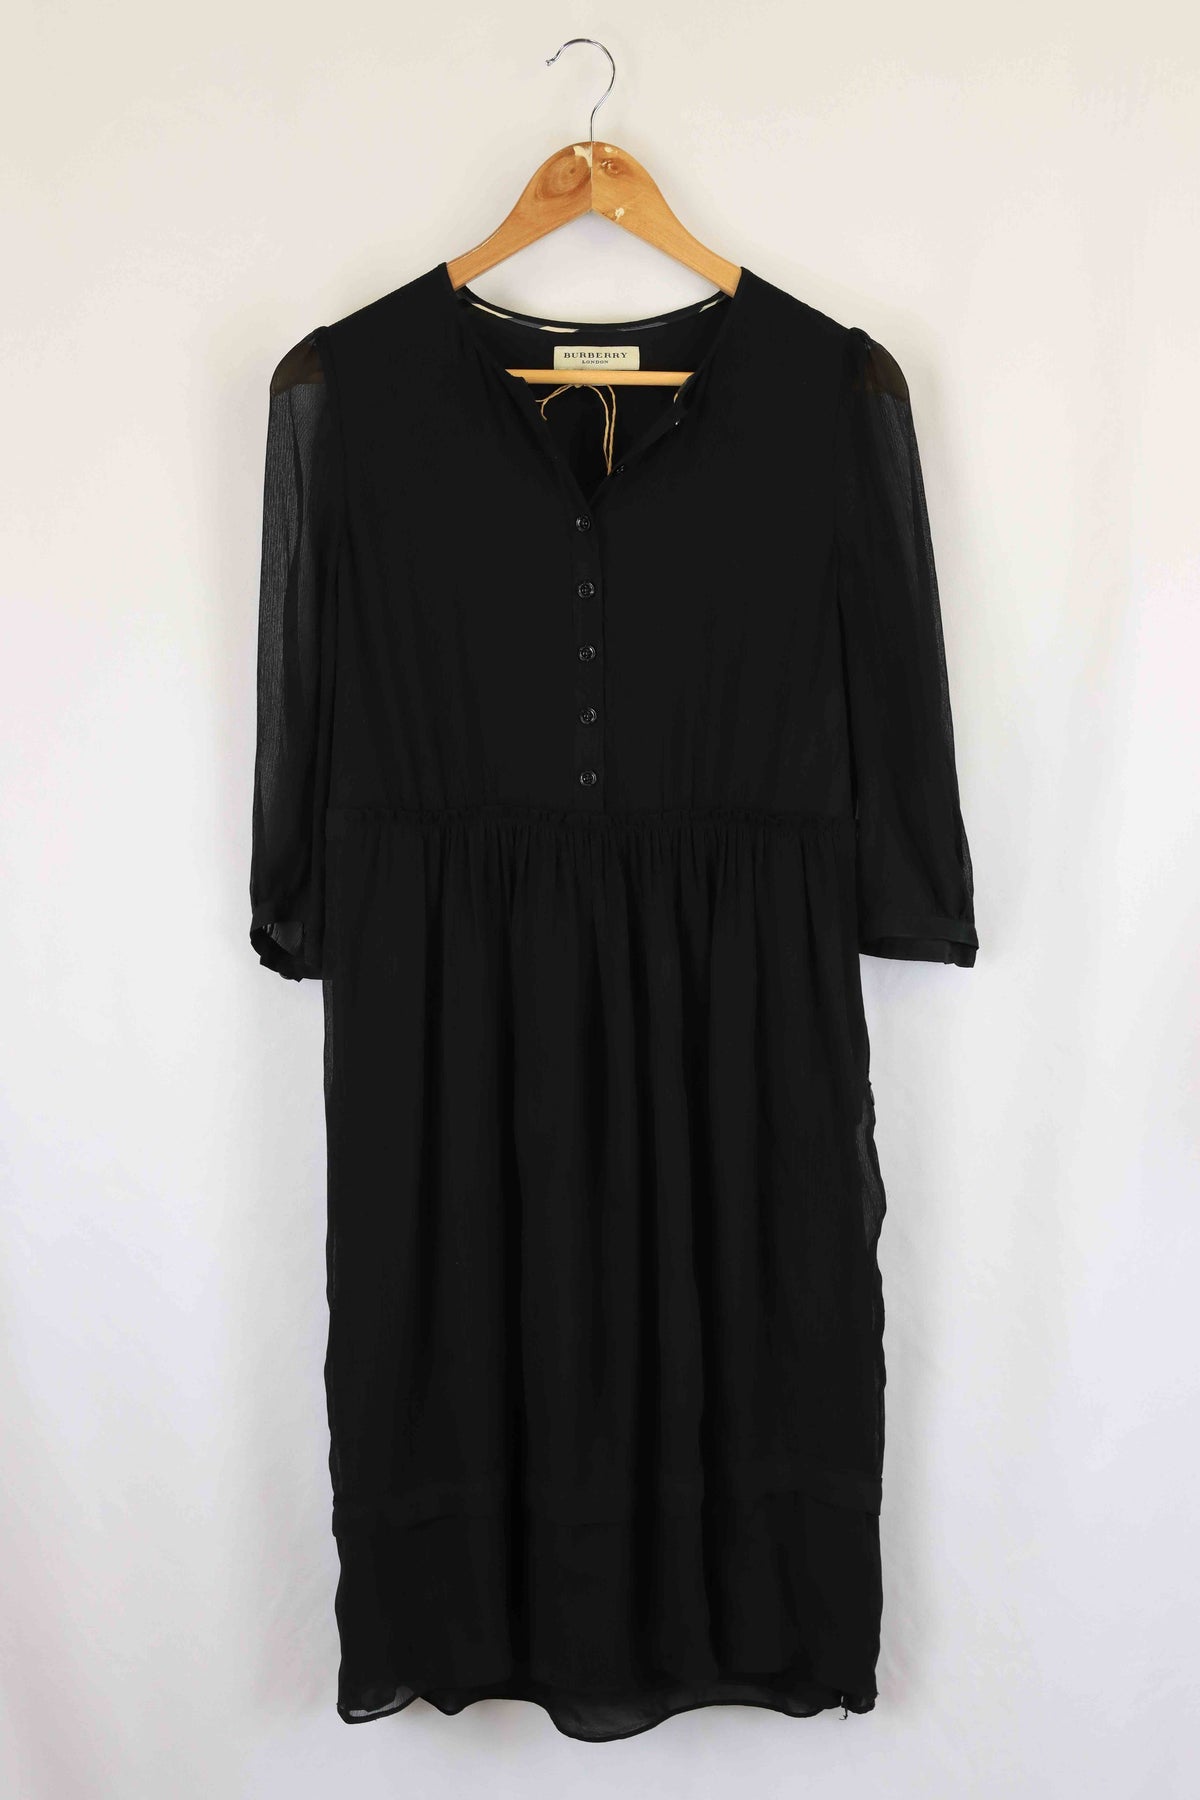 Burberry Black Dress 8